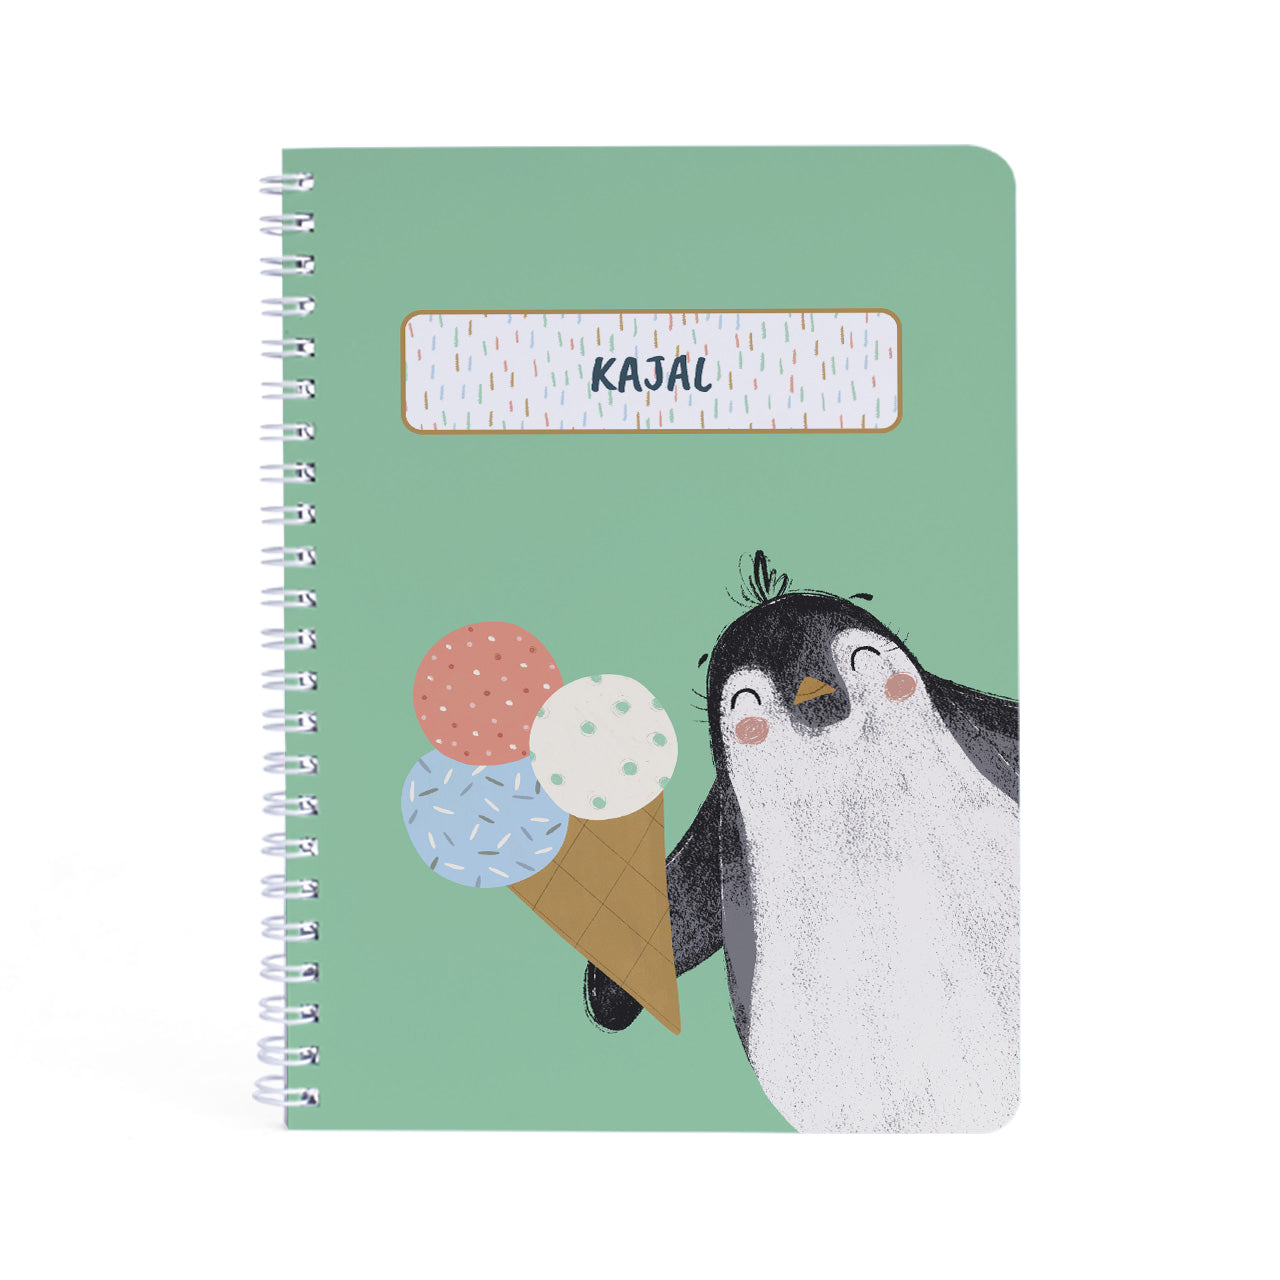 Personalised Spiral Notebook - Ice Cream Fun